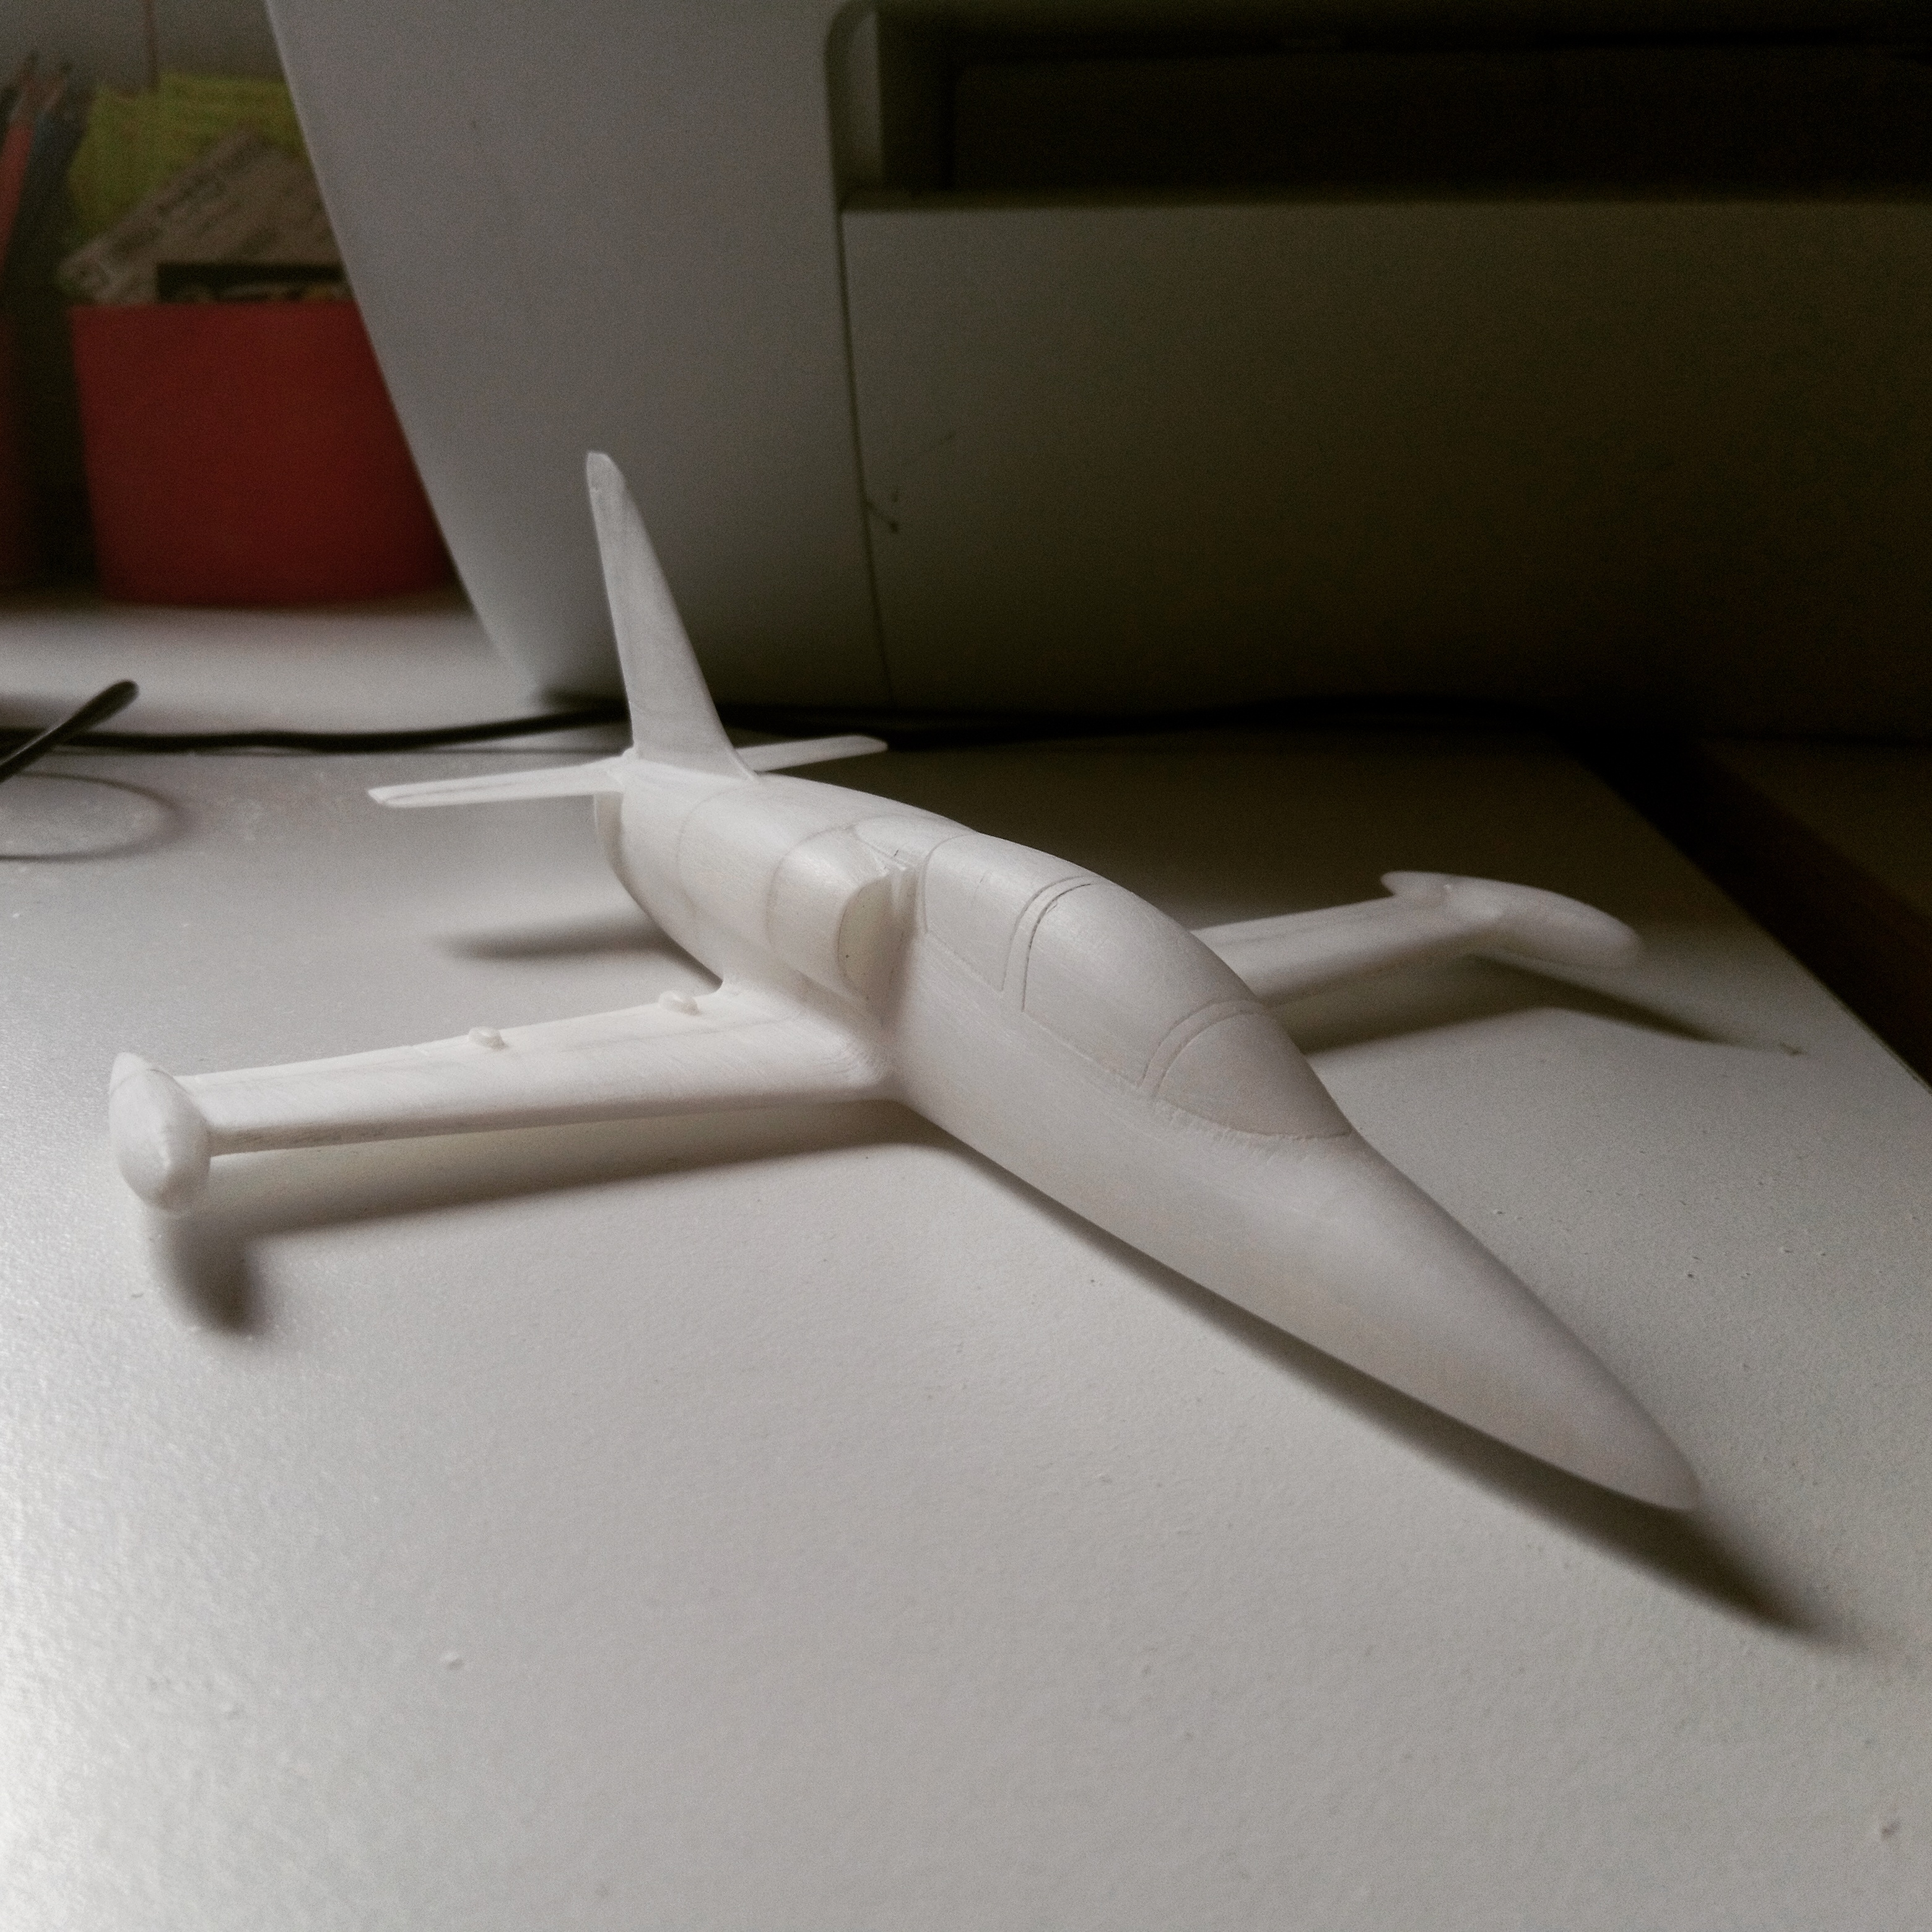 Aero L-39 Albatros aircraft scale model easy to print